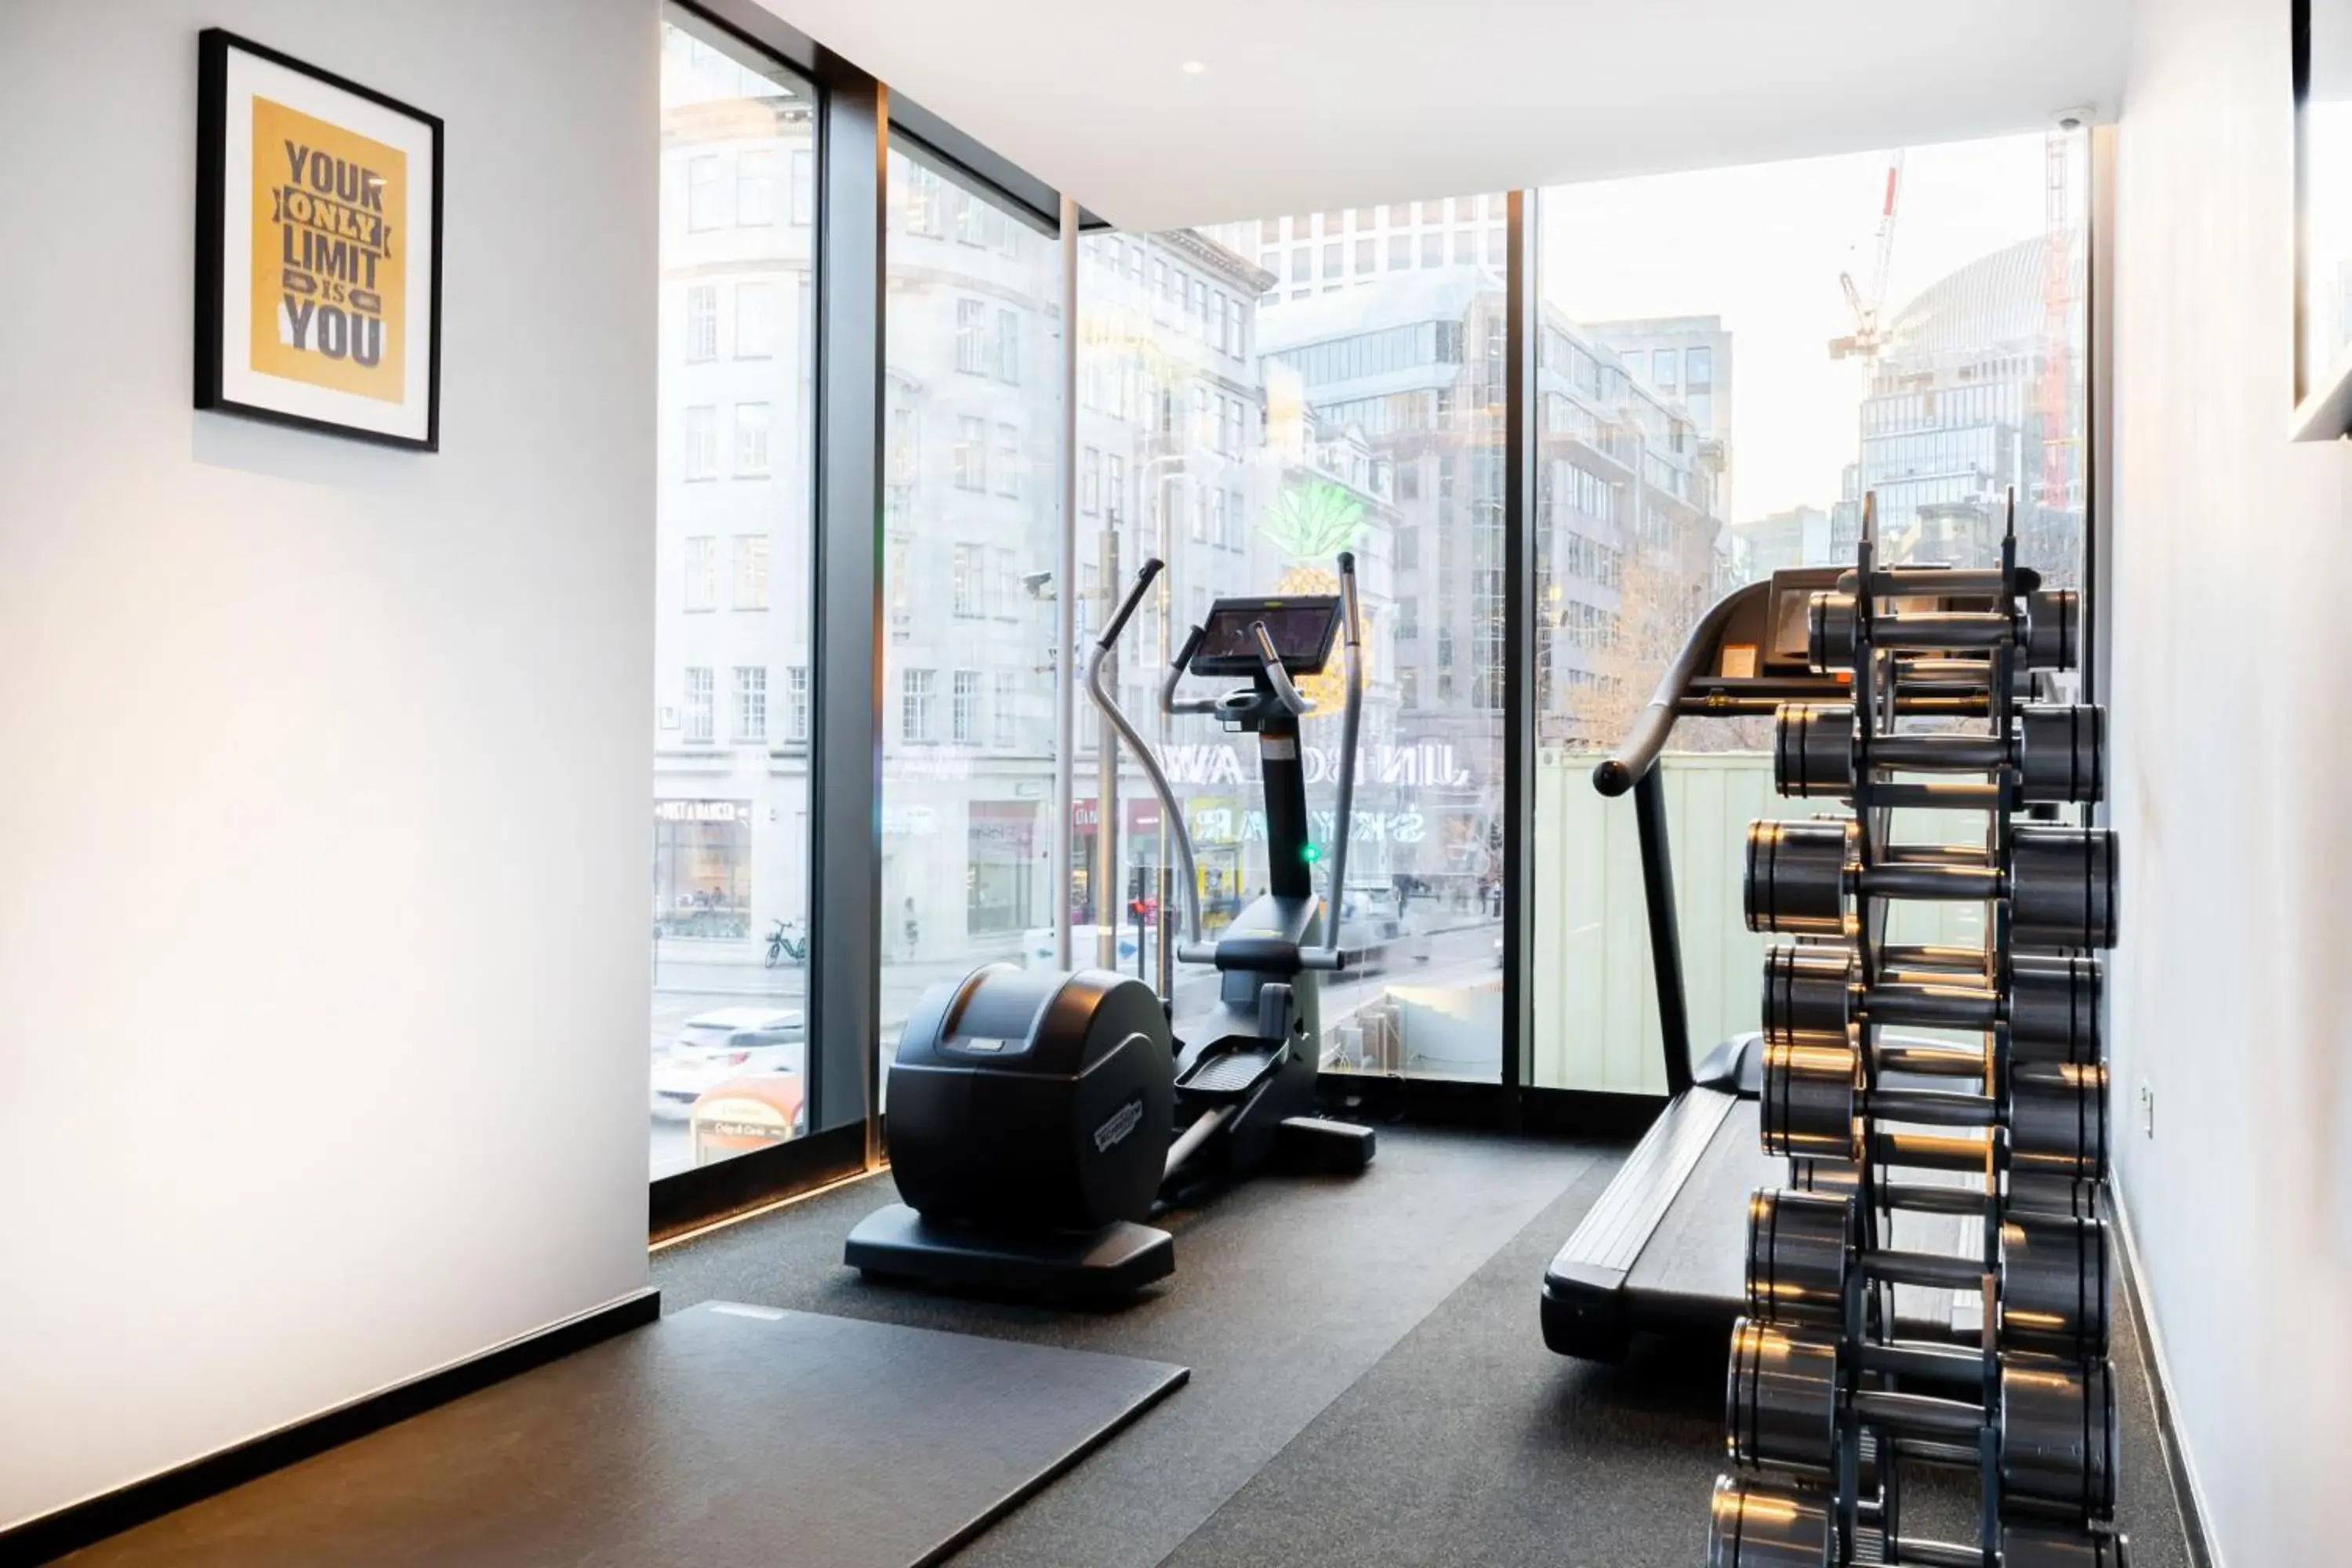 Fitness centre/facilities, Fitness Center/Facilities in Hotel Saint London